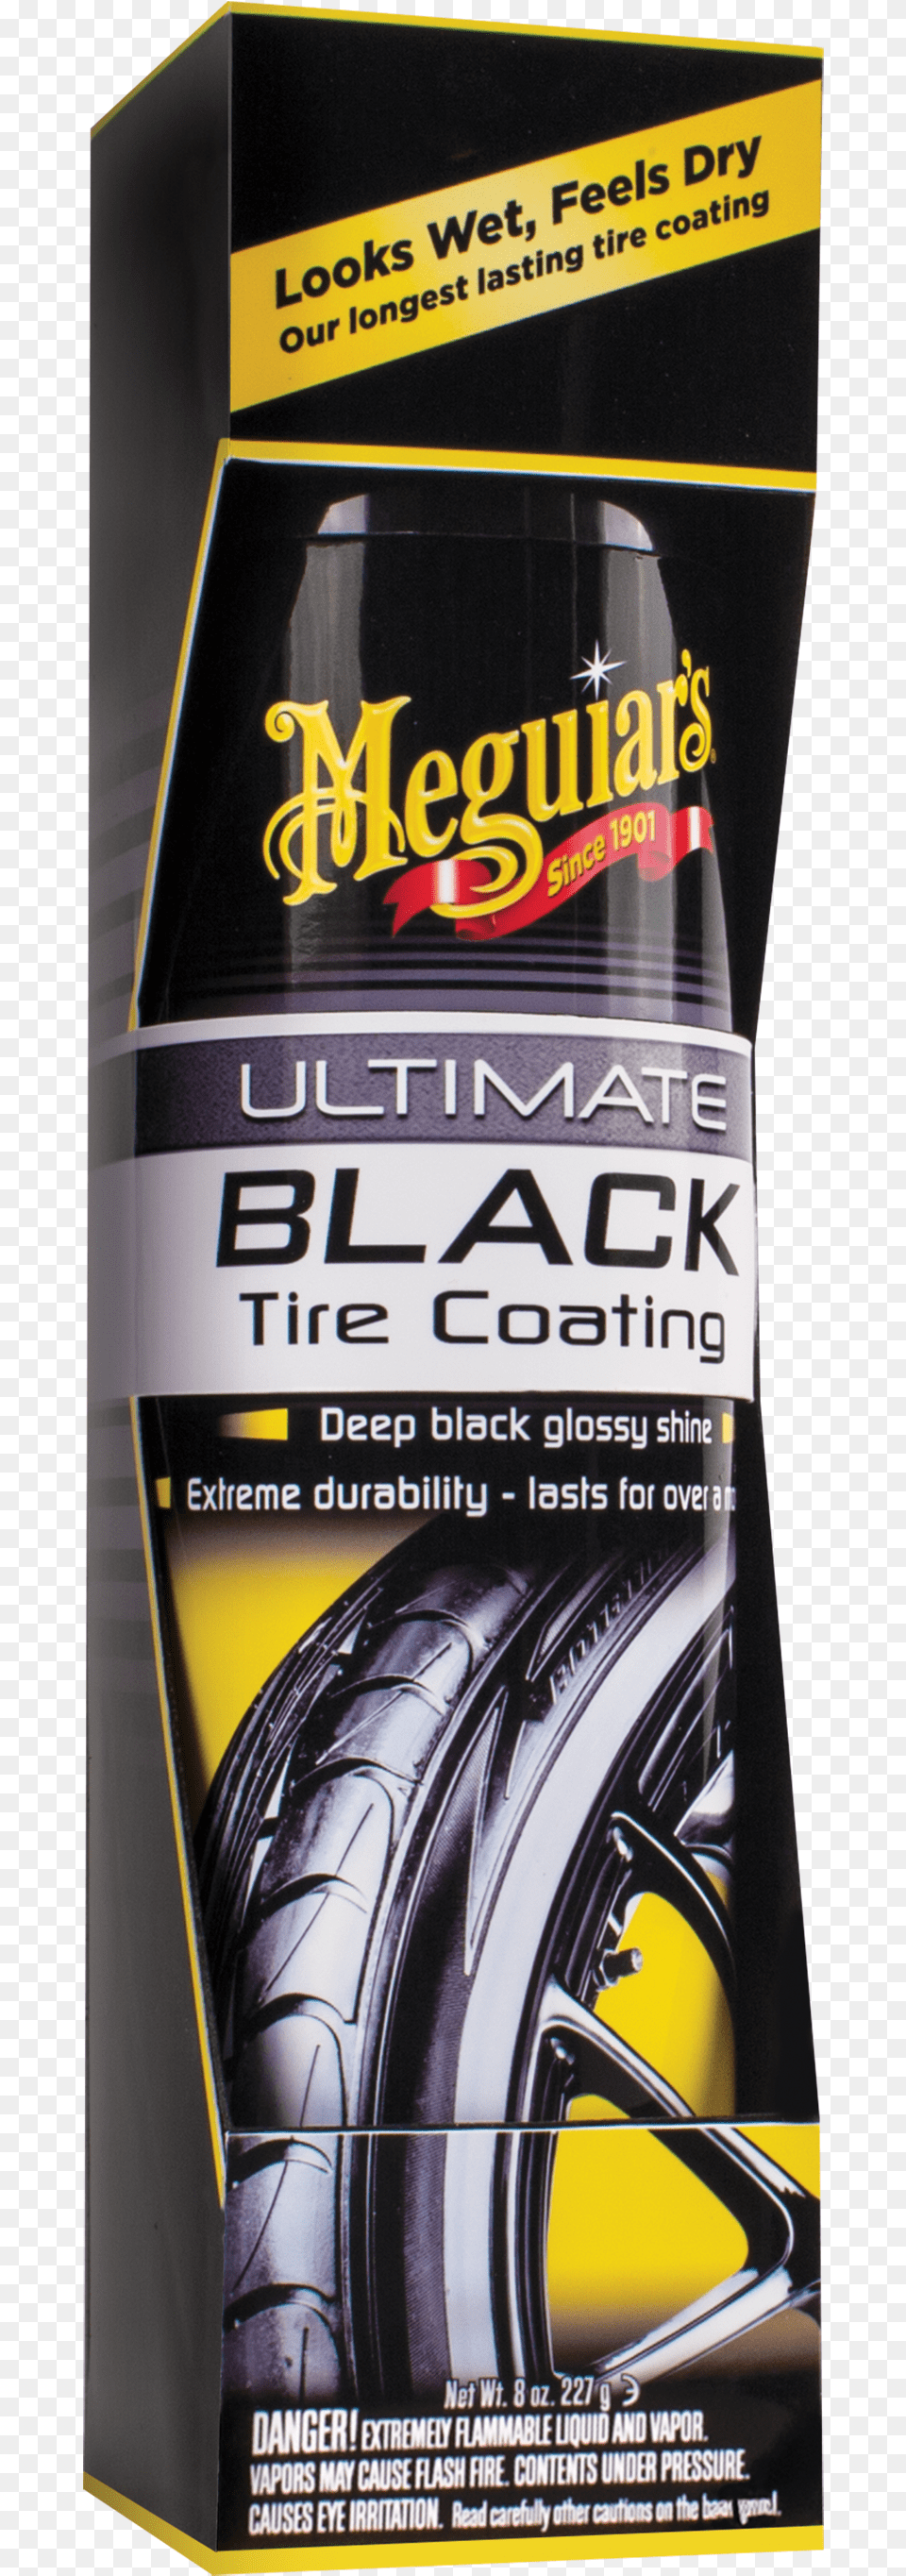 Ultimate Black Tire Coating Ultimate Black Tire Coating, Advertisement, Vehicle, Transportation, Spoke Png